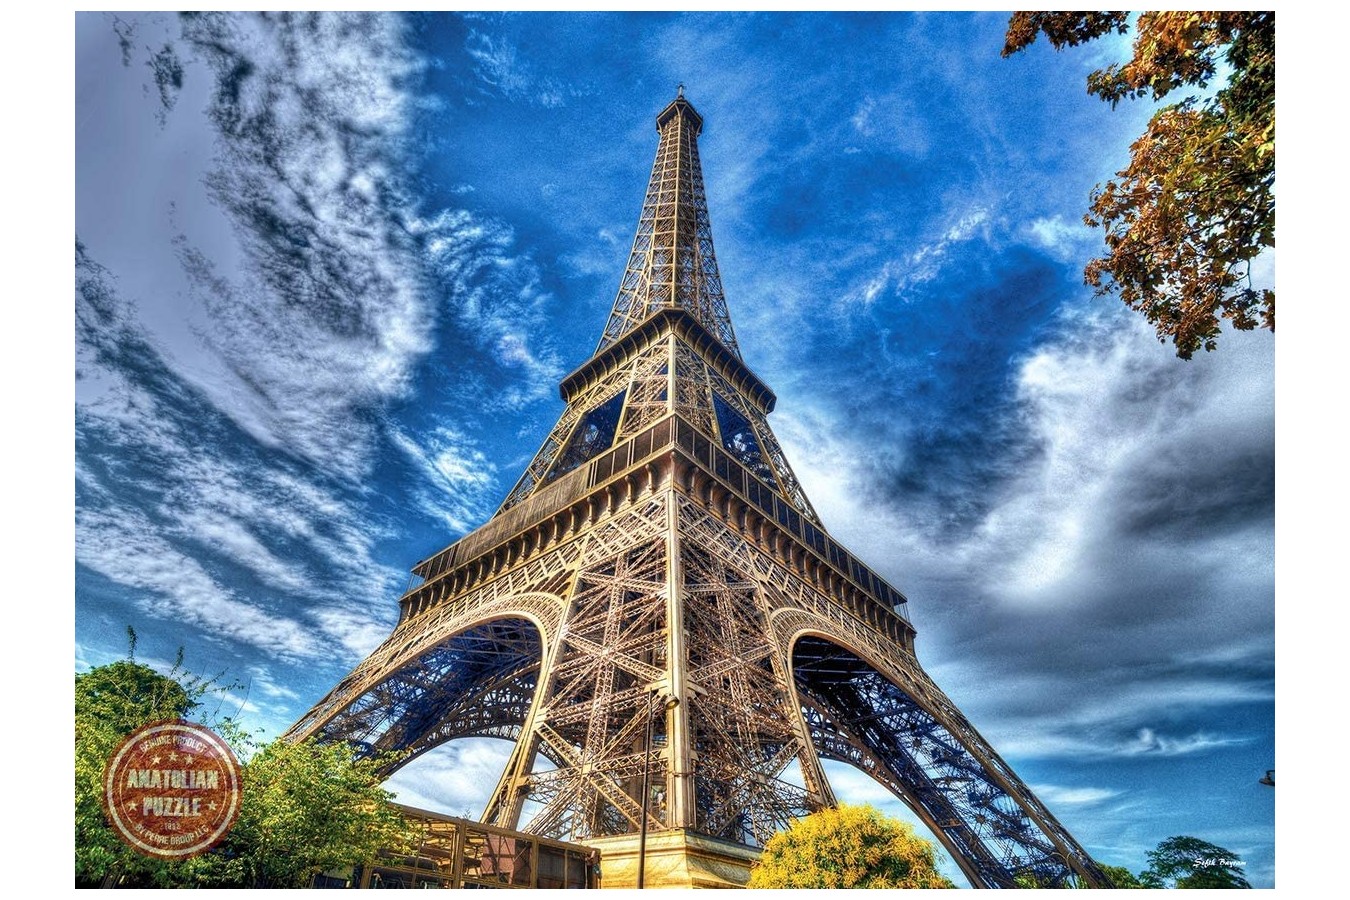 Puzzle Anatolian - Eiffel Tower, 1000 piese (P1080)